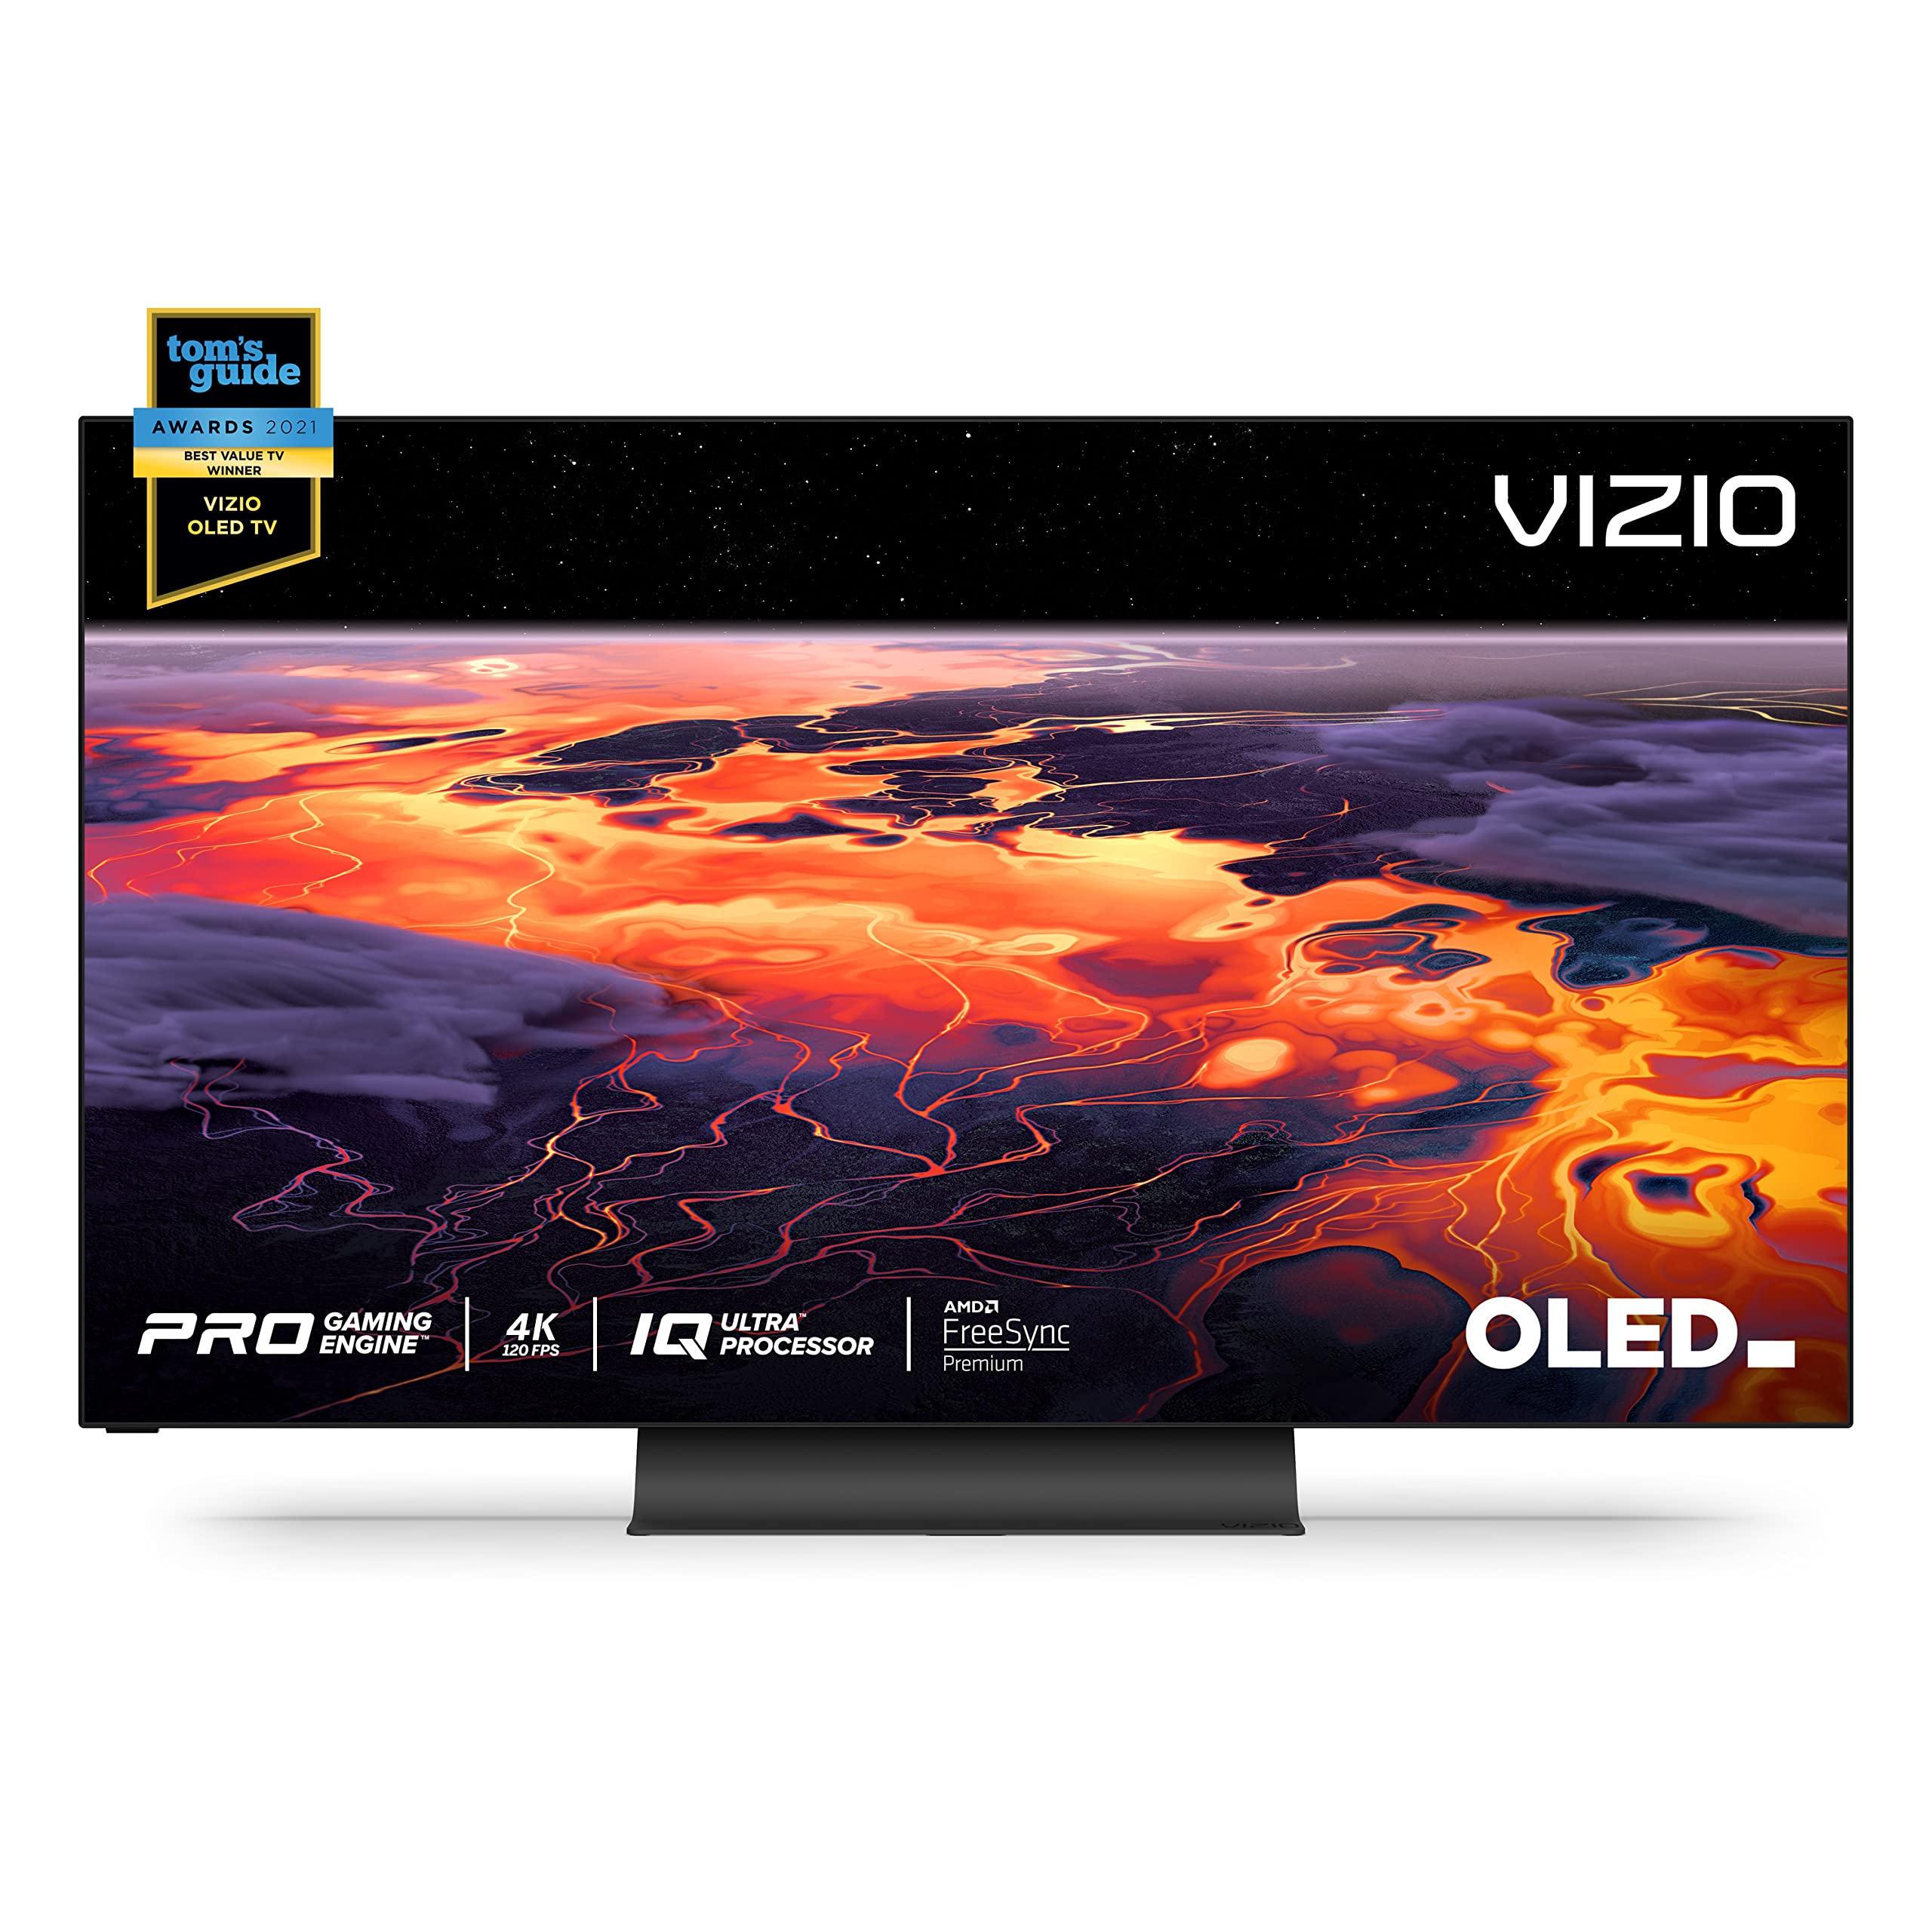  VIZIO تلفزيون ذكي OLED Premium 4K UHD HDR مقاس 55 بوصة مزود بتقنية Dolby Vision و HDMI 2.1 ومعدل تحديث 120 هرتز ومحرك Pro للألعاب و Apple AirPlay...